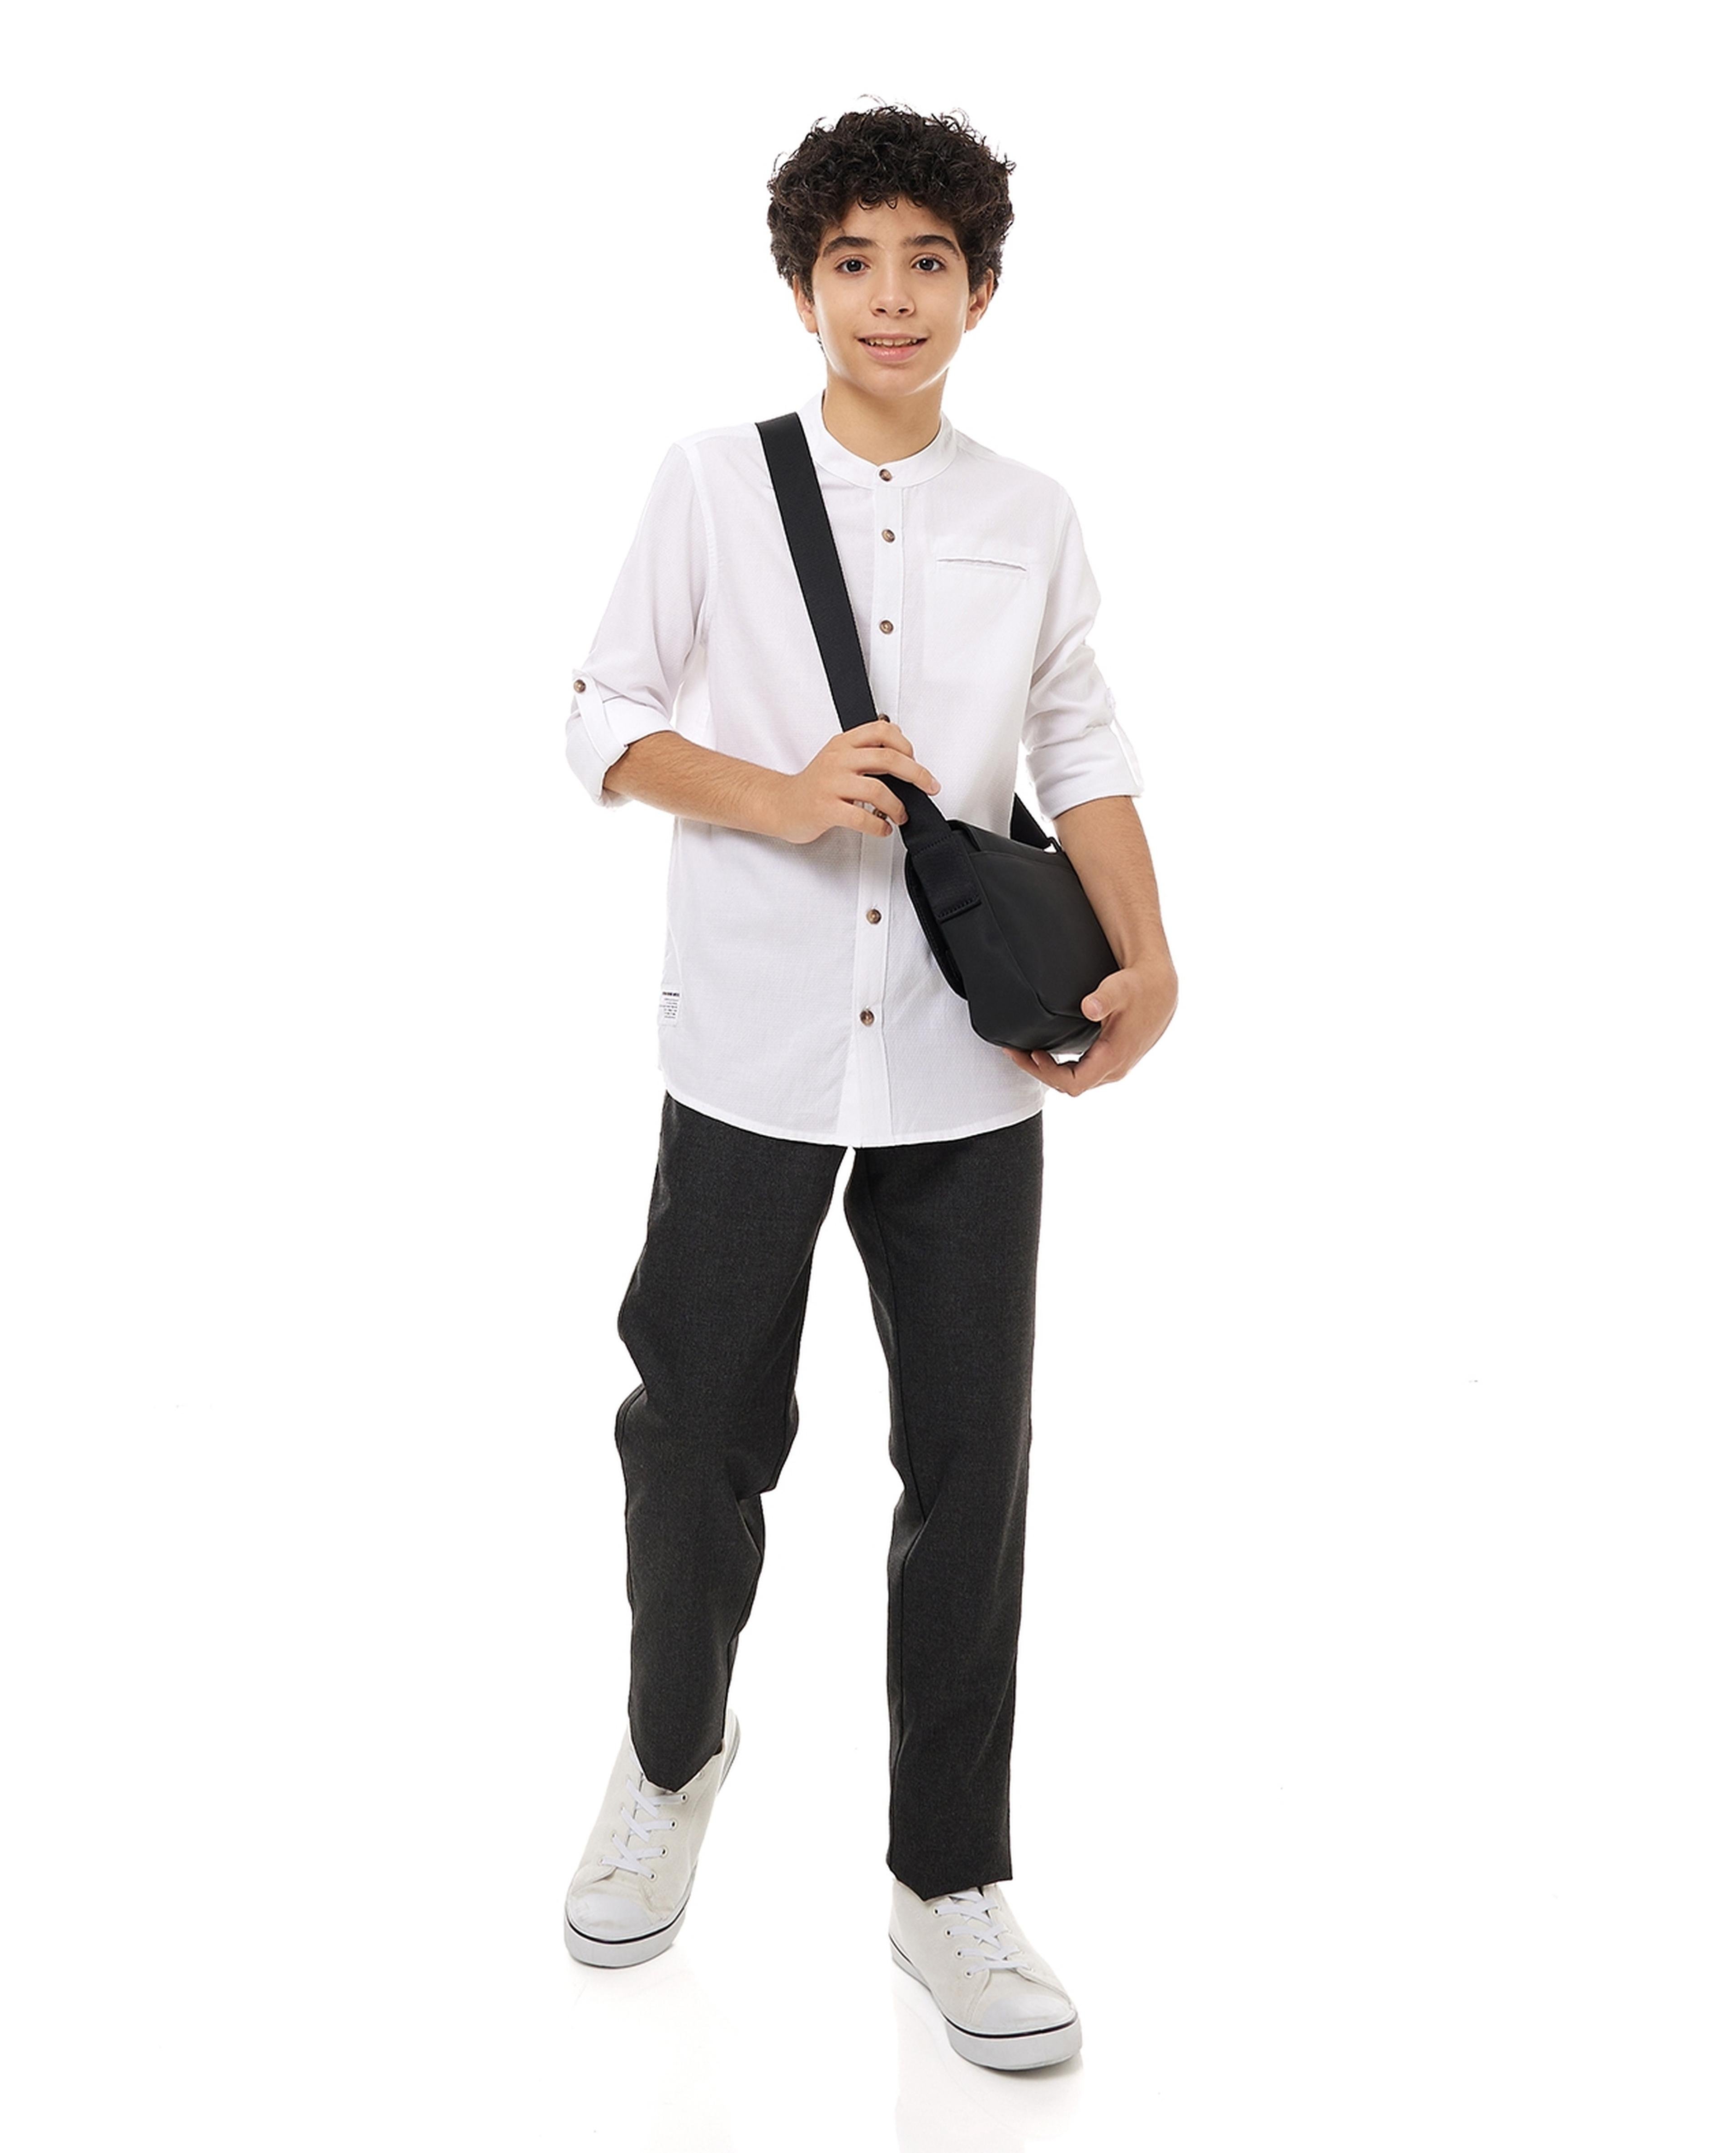 Solid Shirt with Mandarin Collar and Long Sleeves